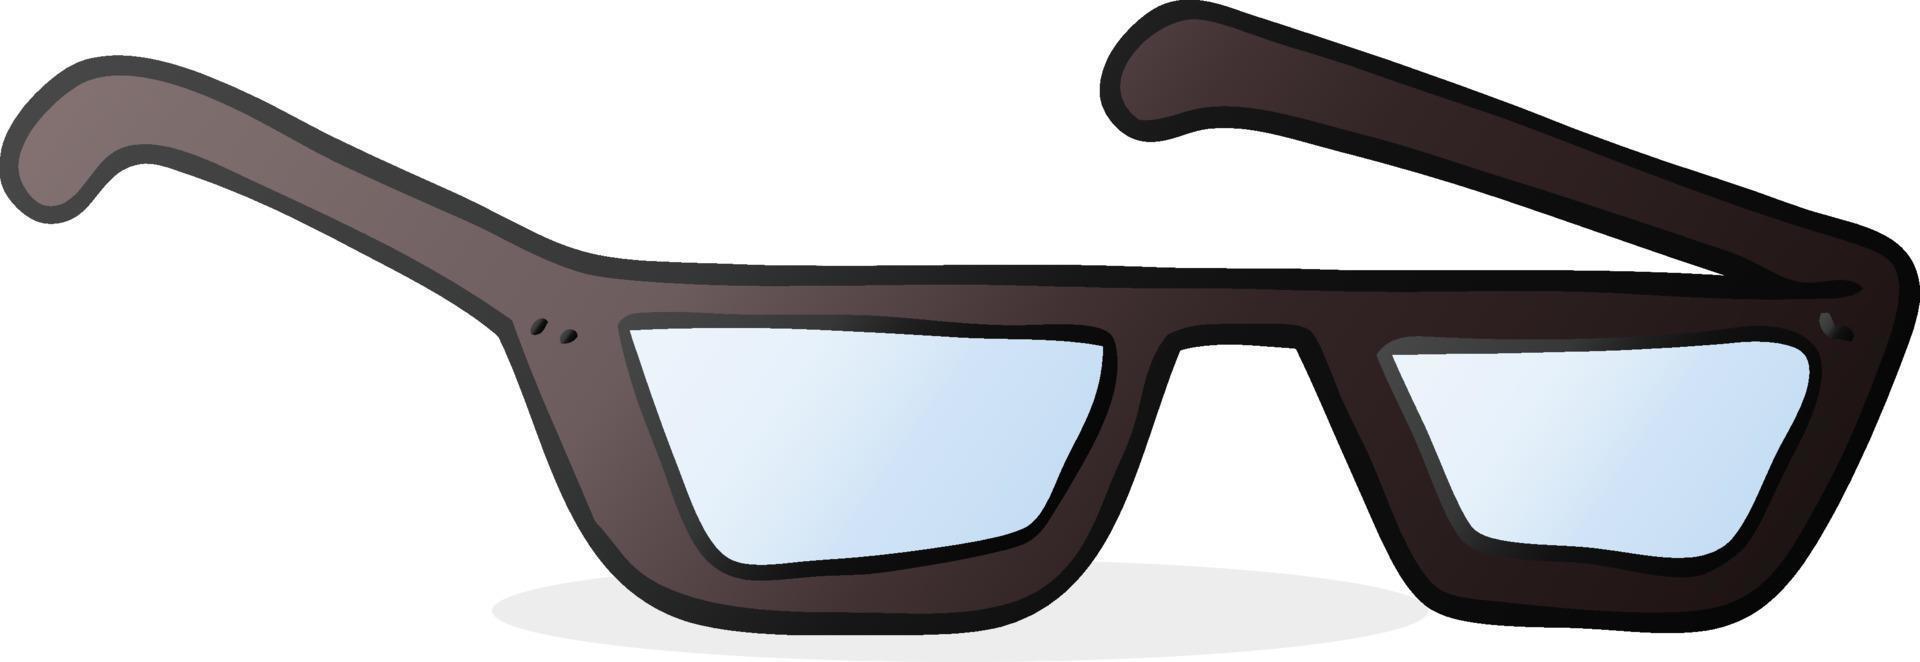 freehand dragen tecknad serie glasögon vektor